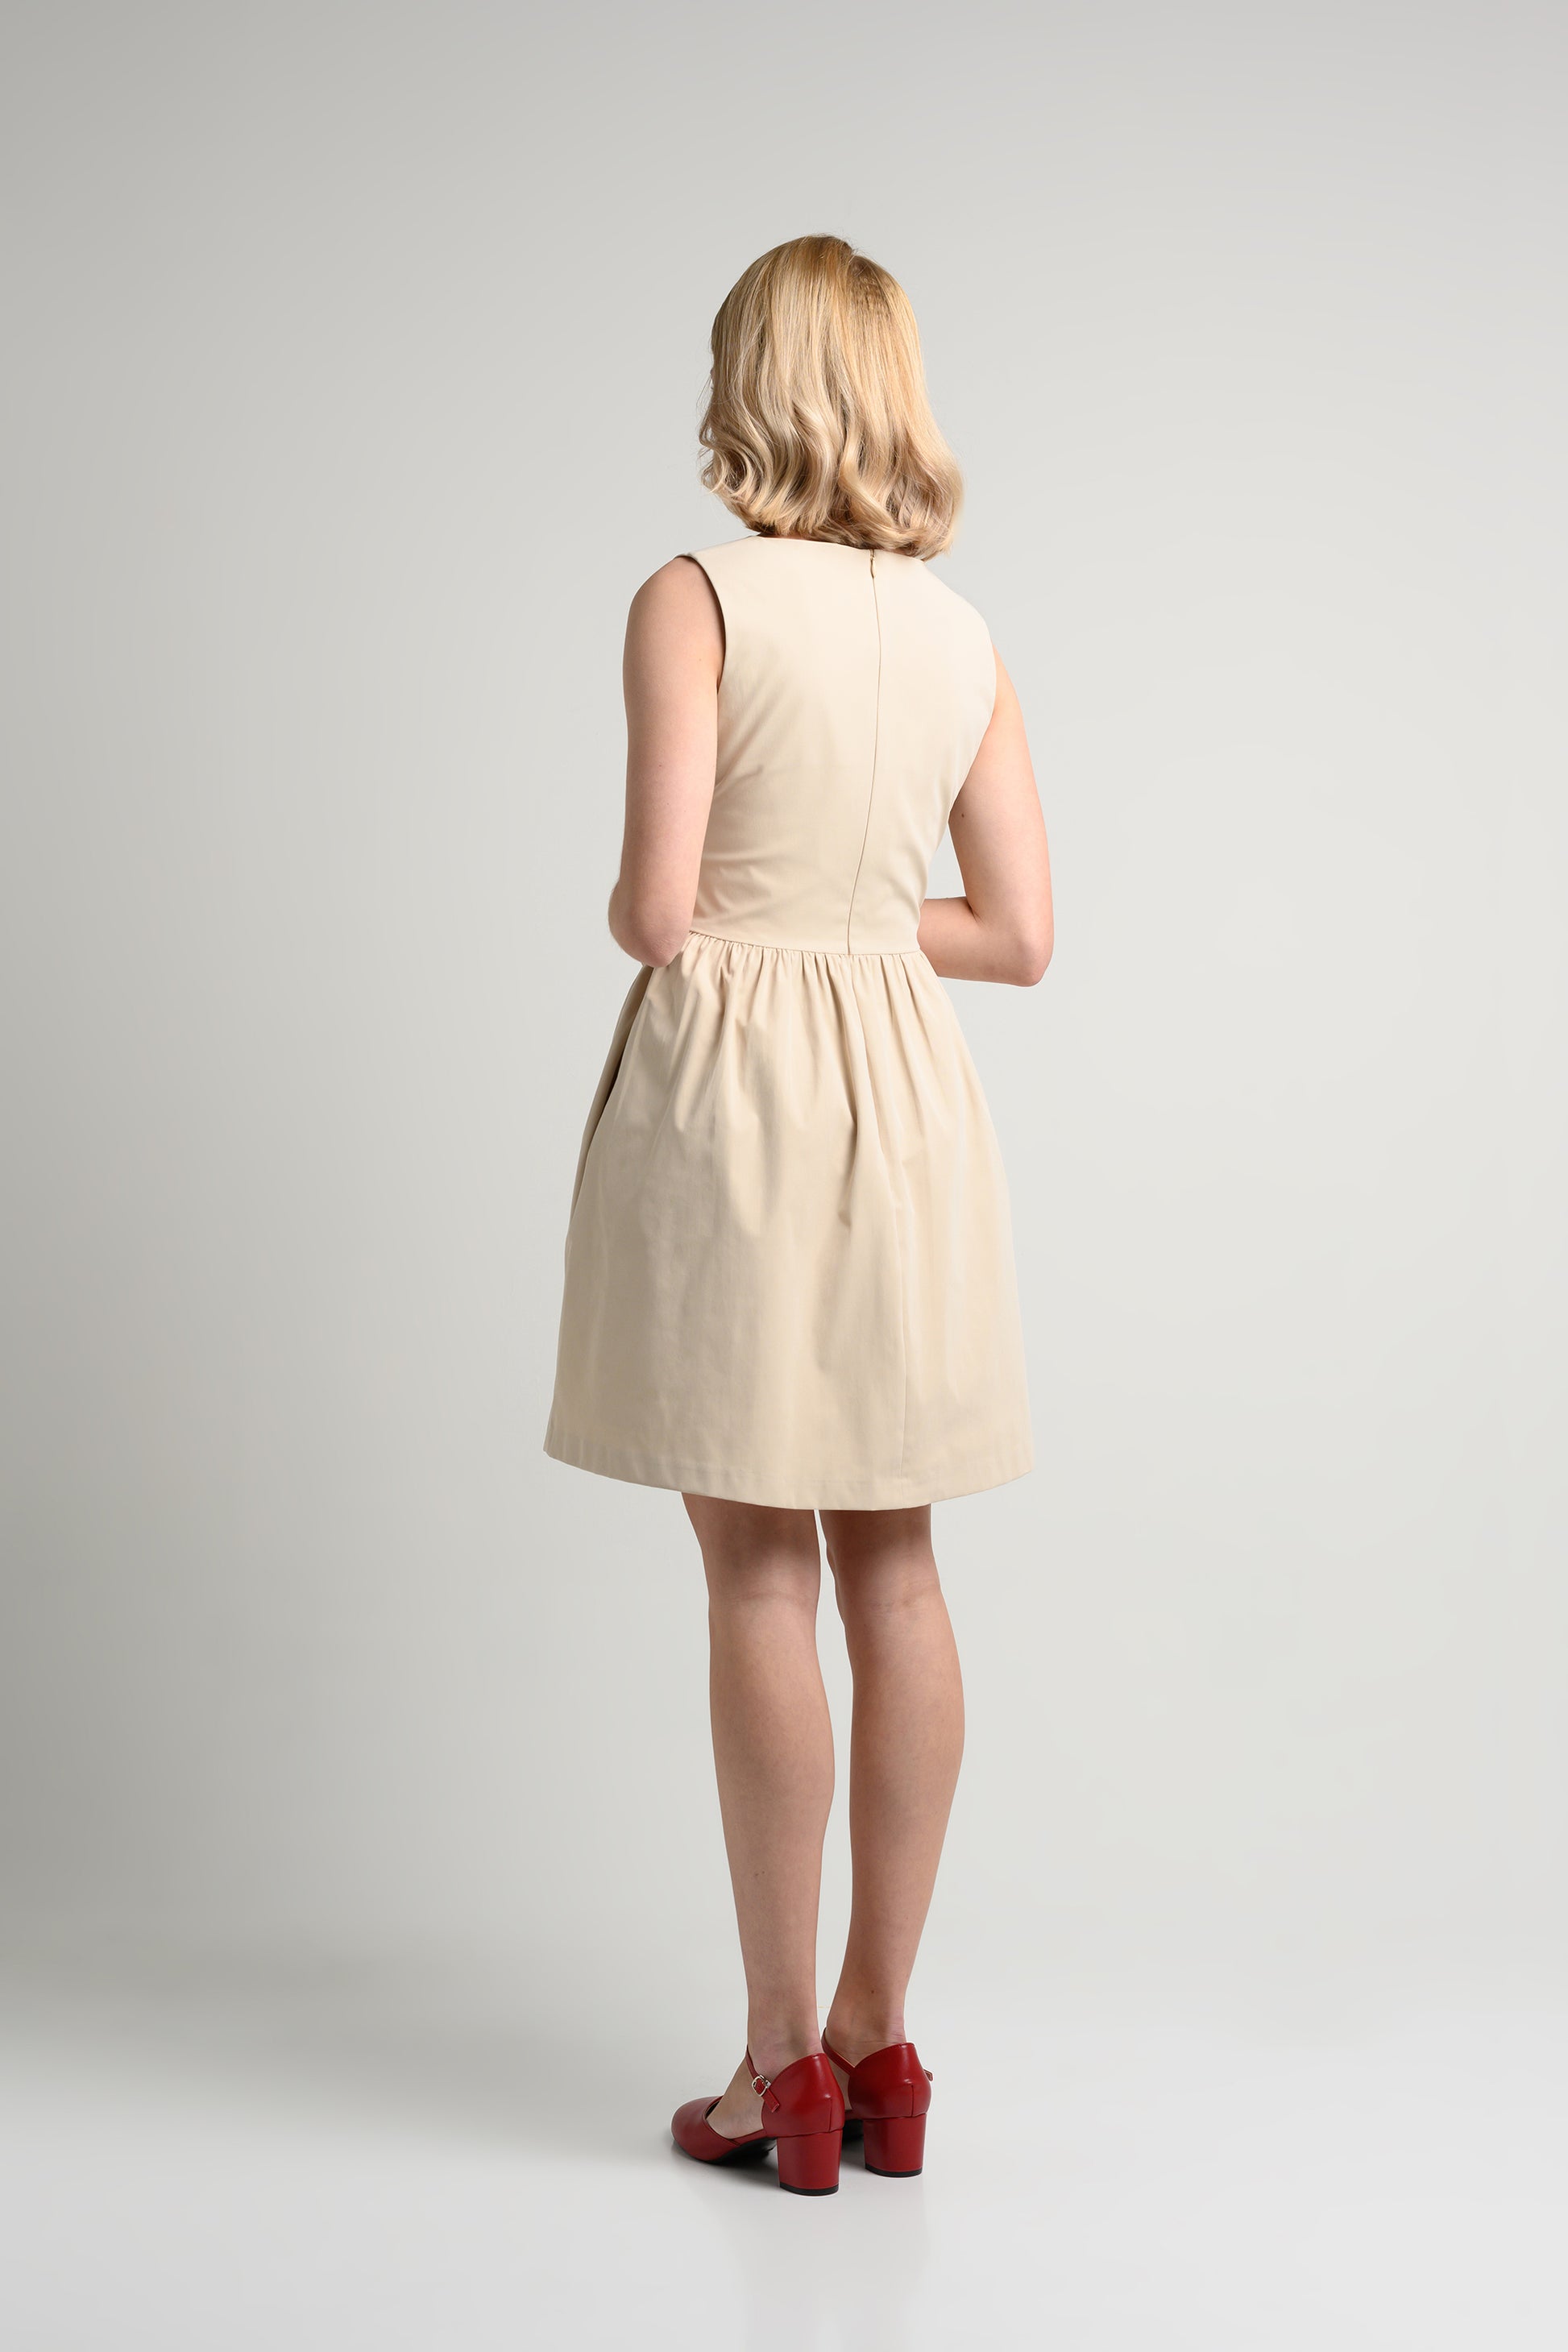 Rosylee Bow Sash Dress - Cream 2